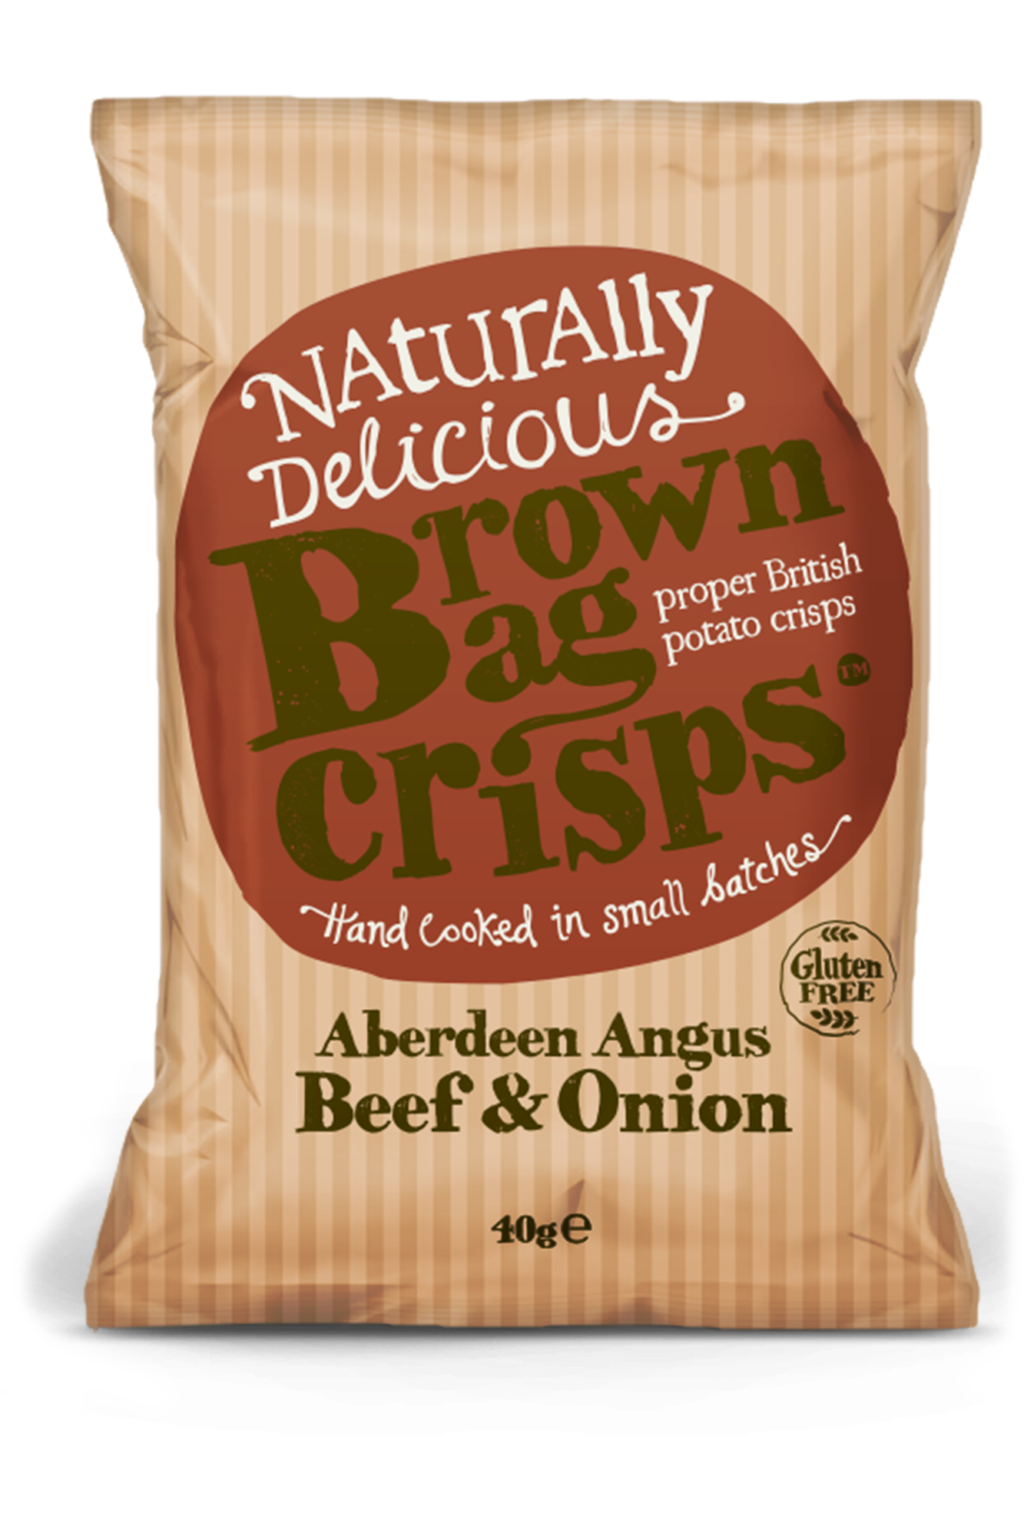 Brown Bag Crisps (40g)